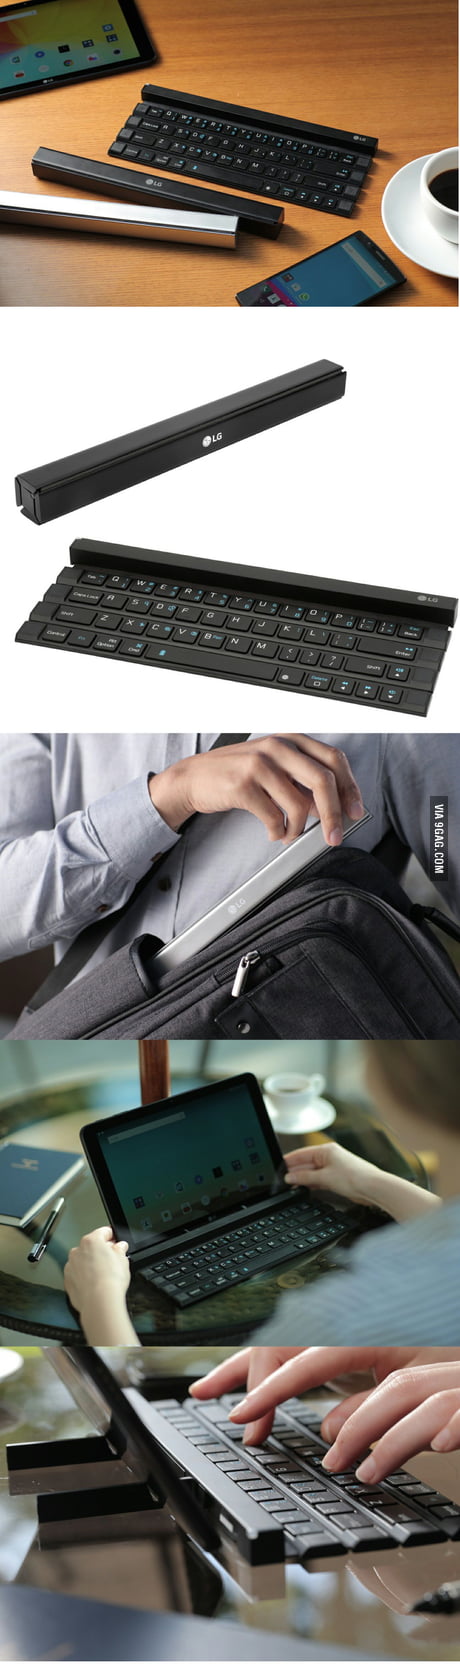 lg keyboard